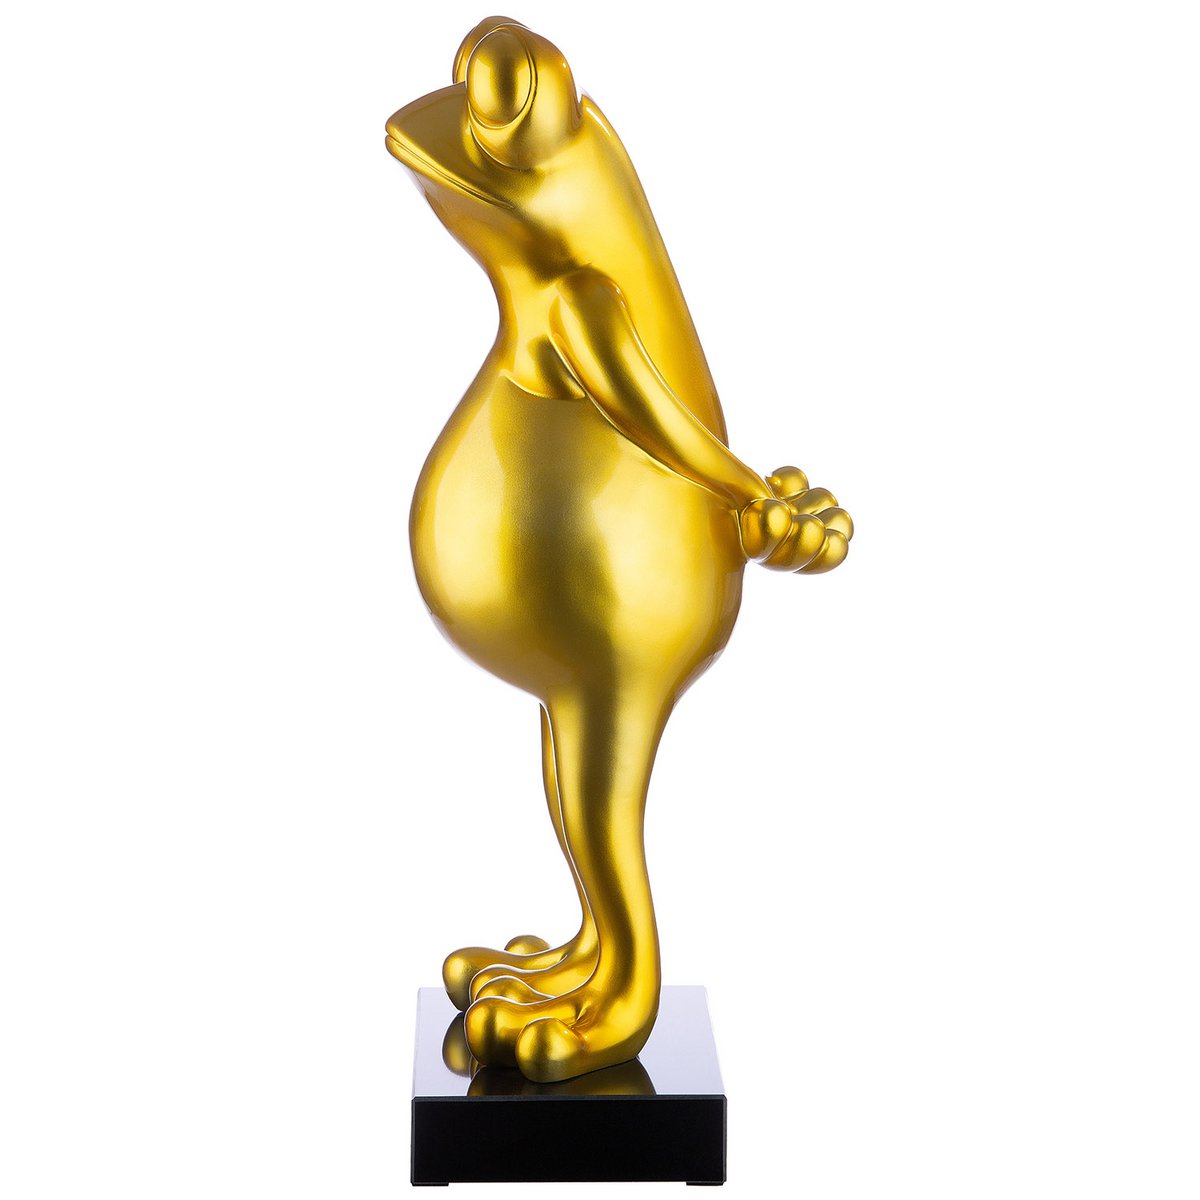 Poly Skulptur Frosch "Frog" gold metallic